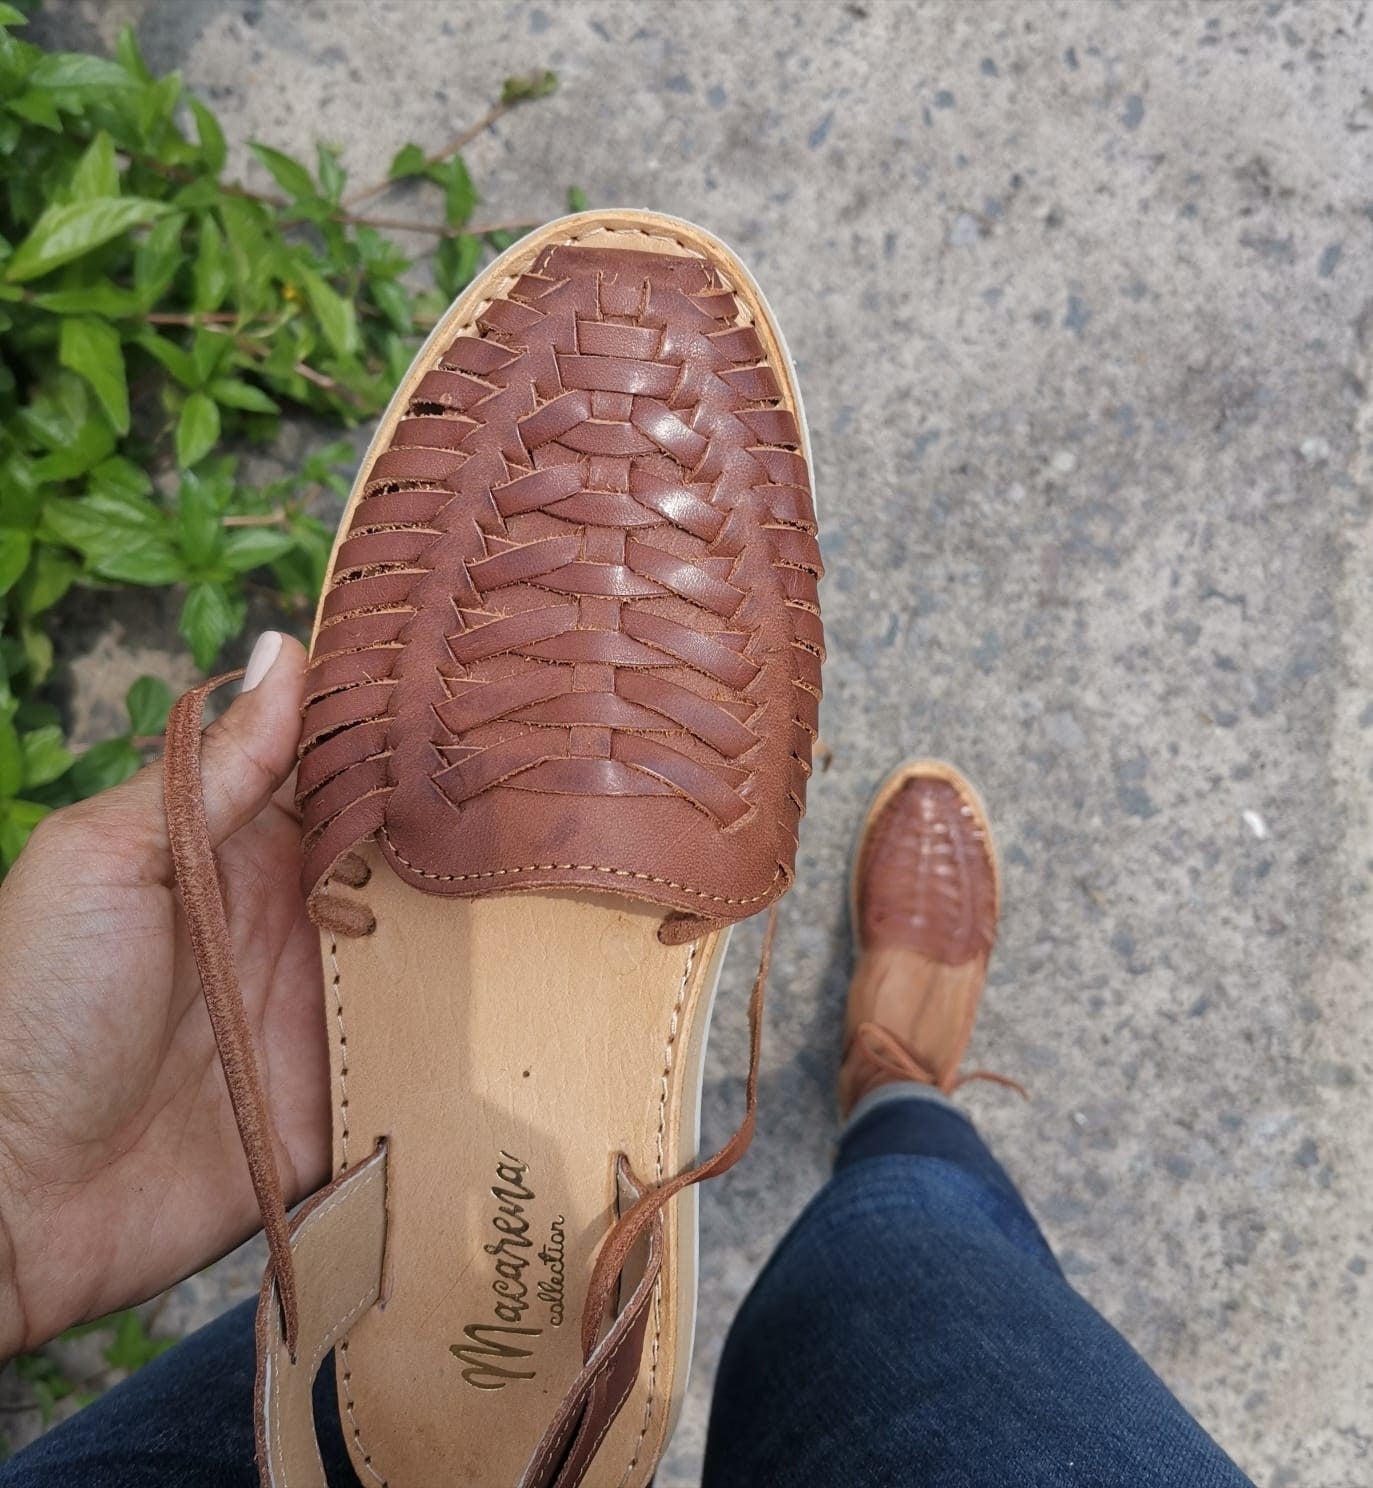 Huarache Brown Alpargata Vintage Hippie Sandal Mexican Style Colorful Mexican Leather Huaraches